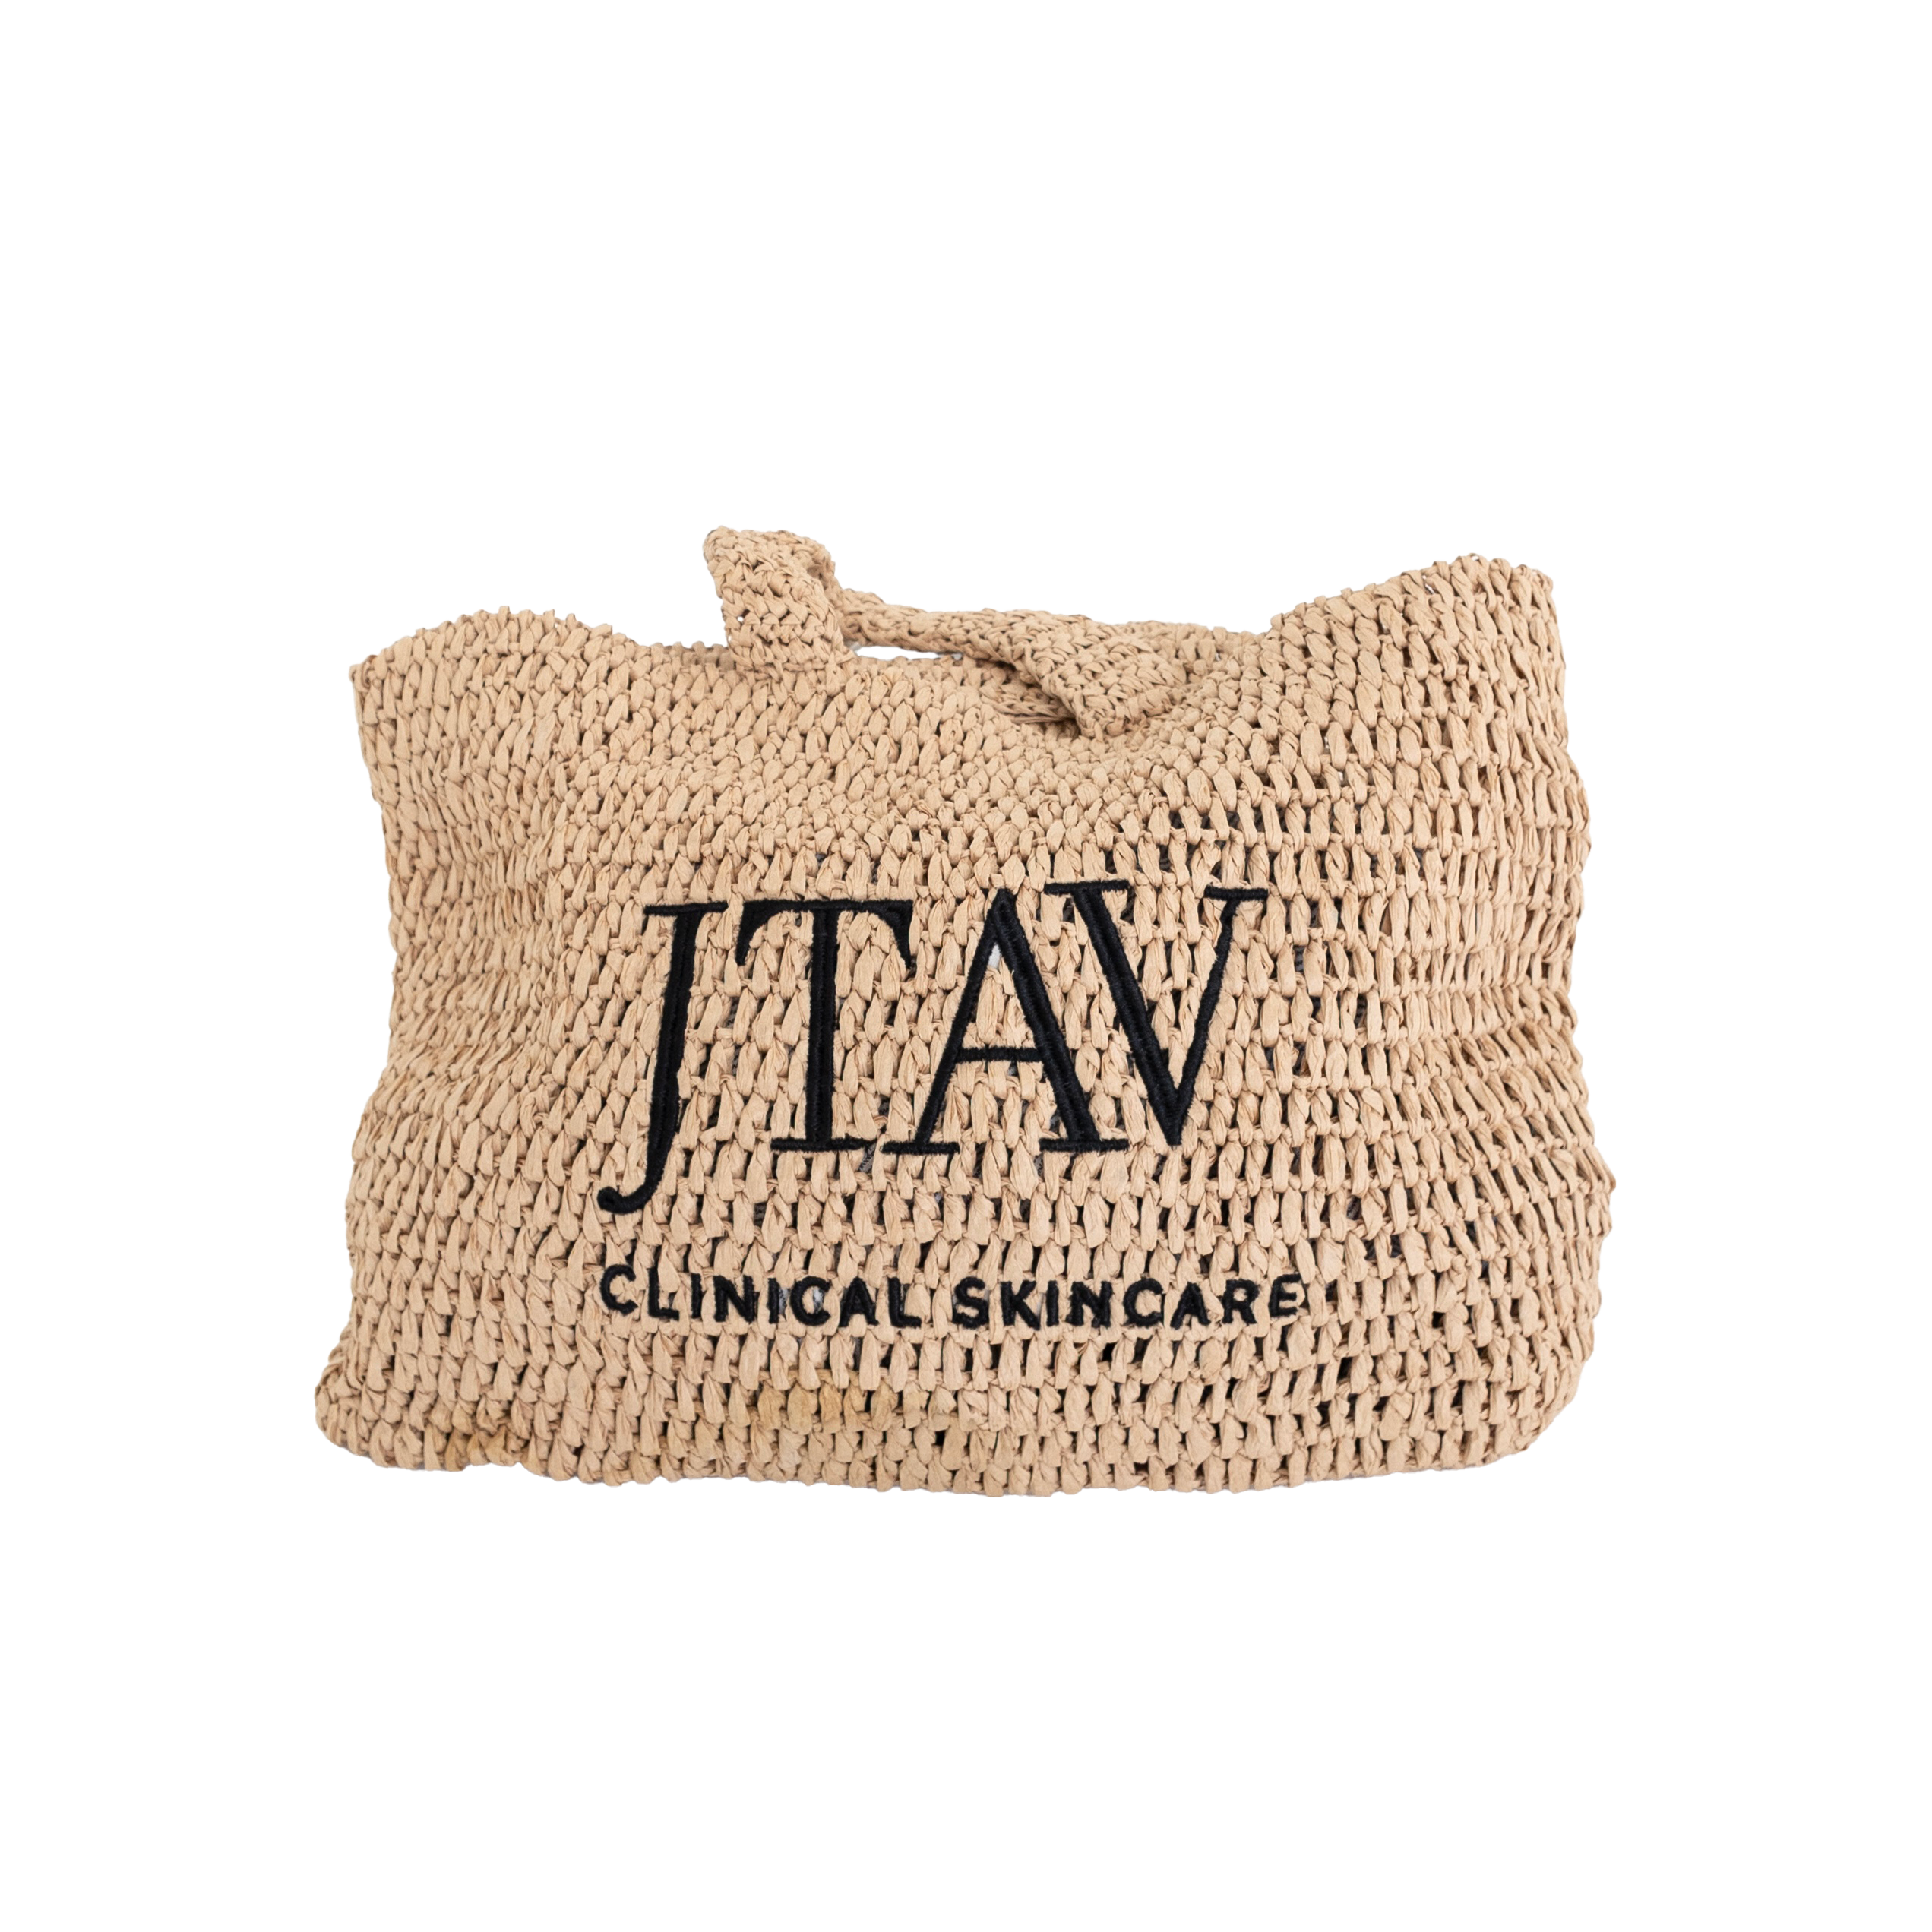 Straw Crochet Bag